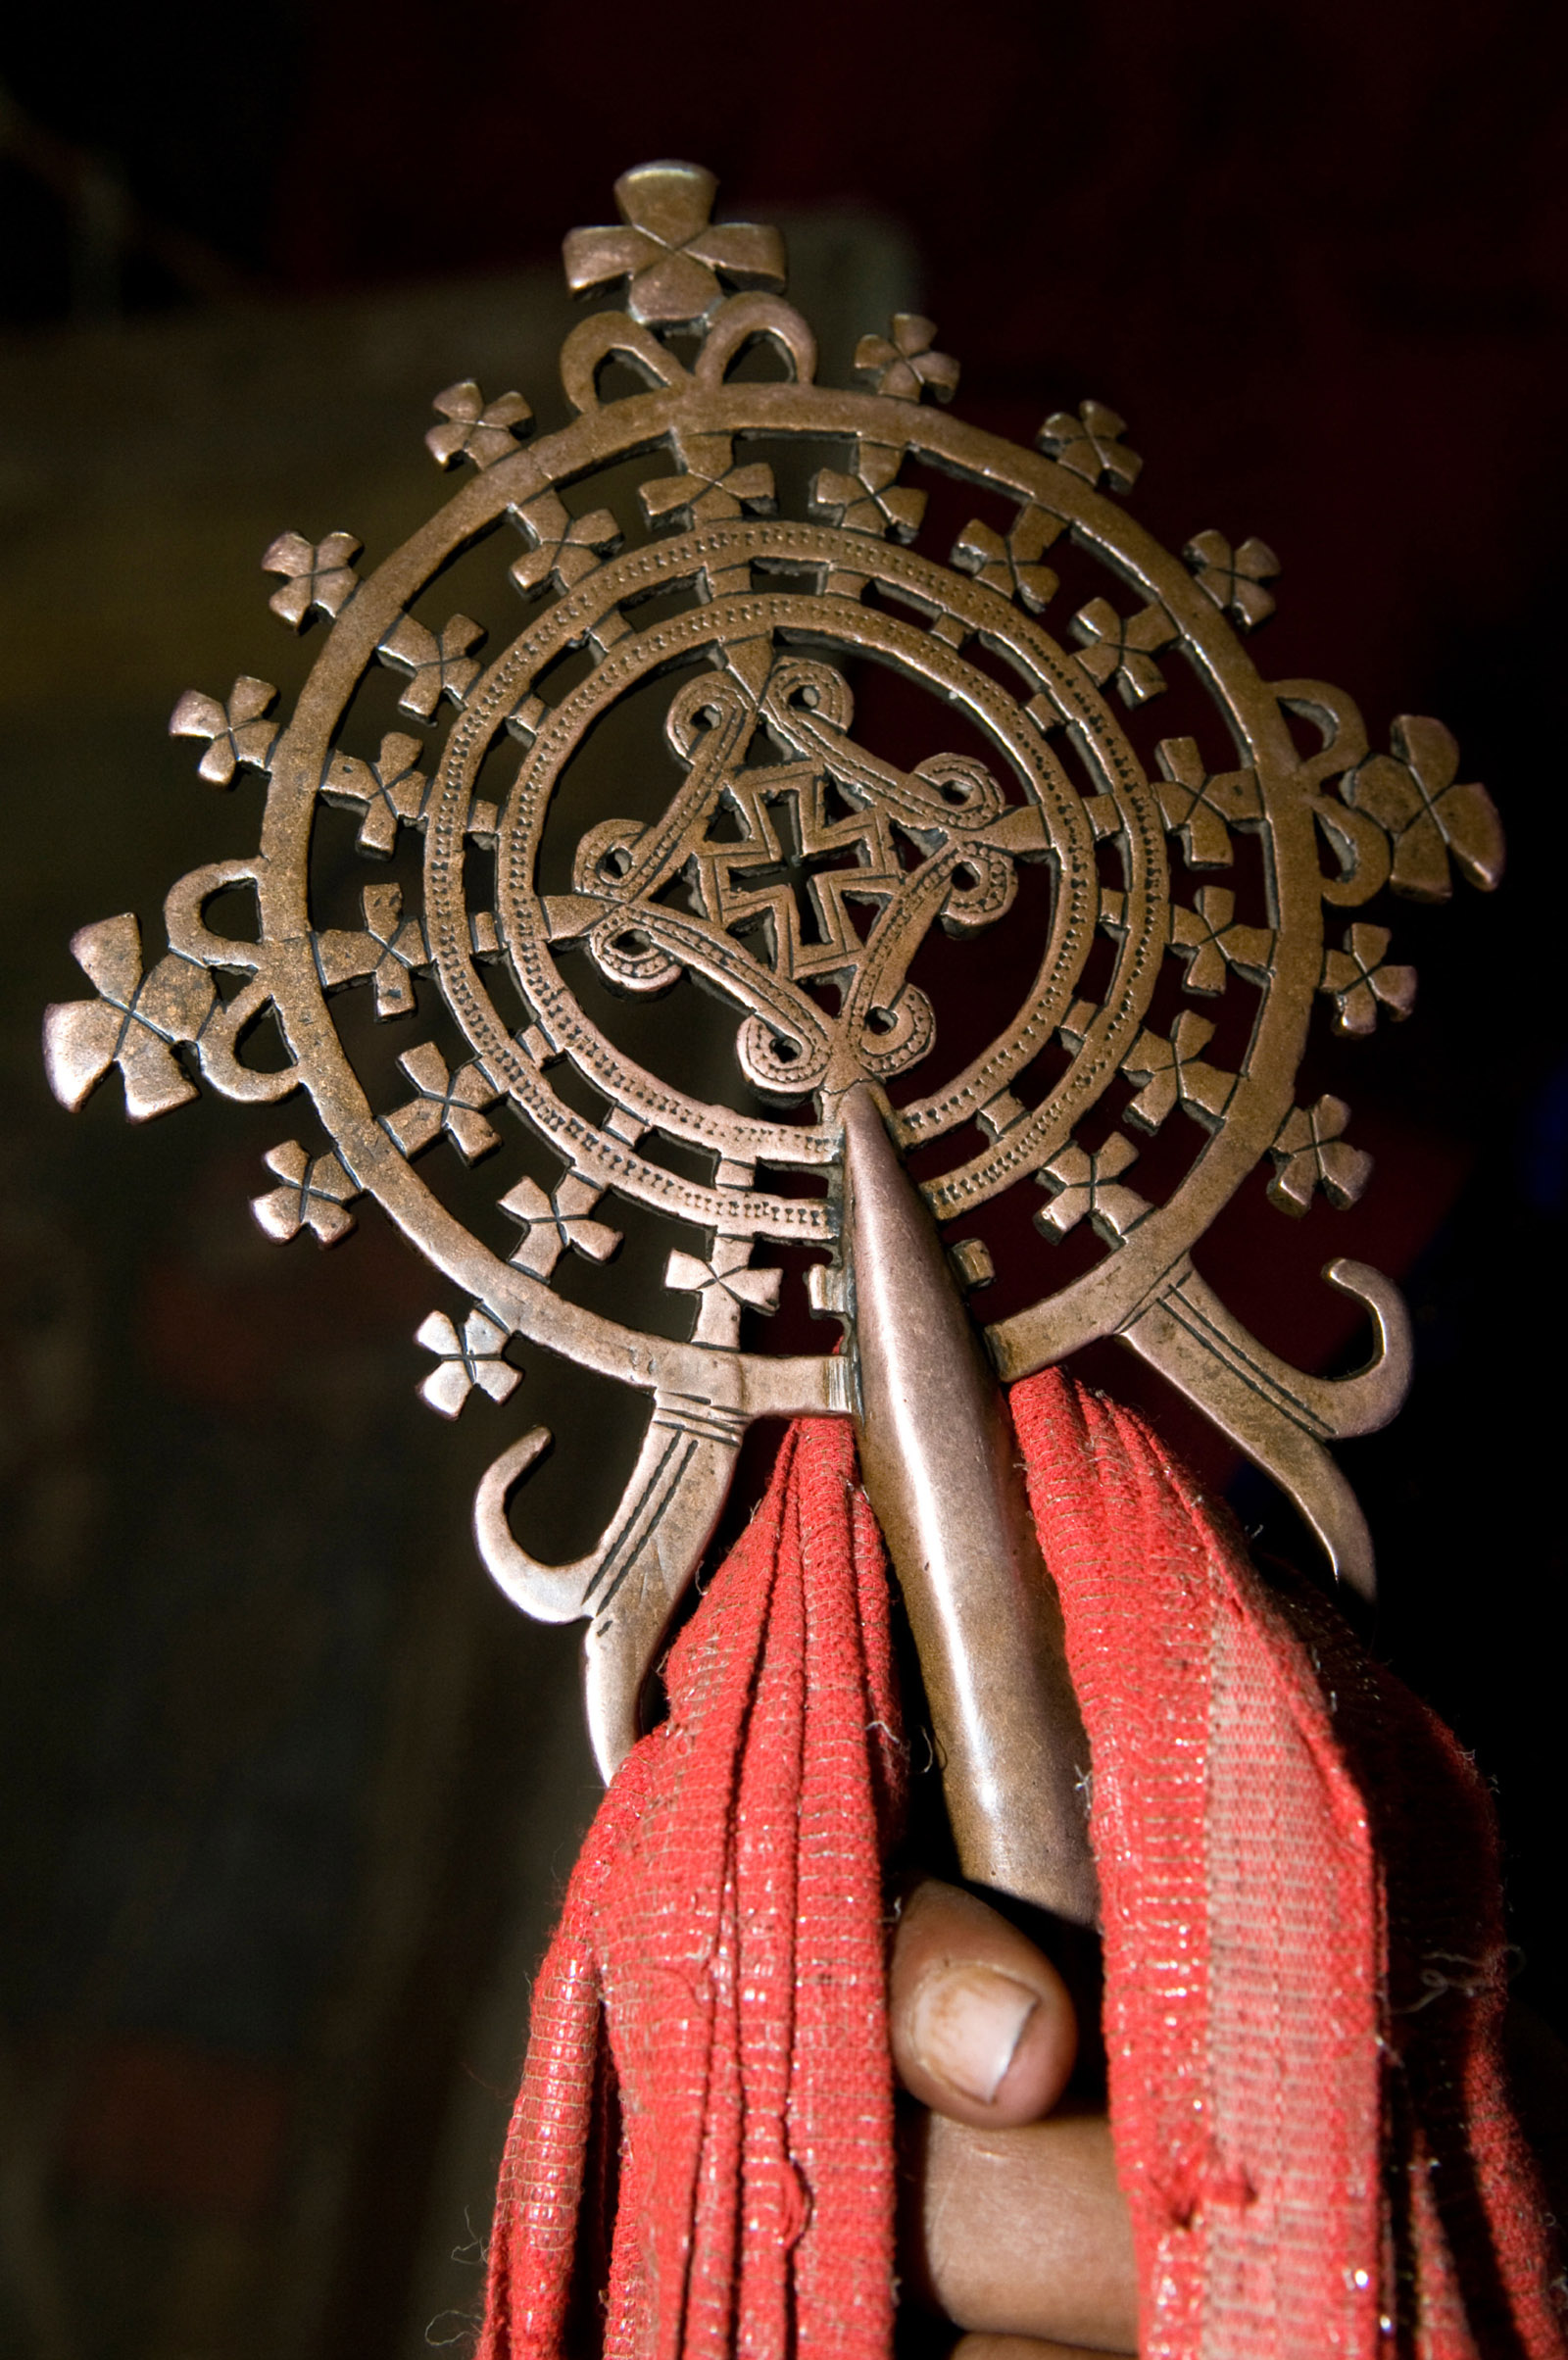 An ancient staff cross, Lalibela, Ethiopia